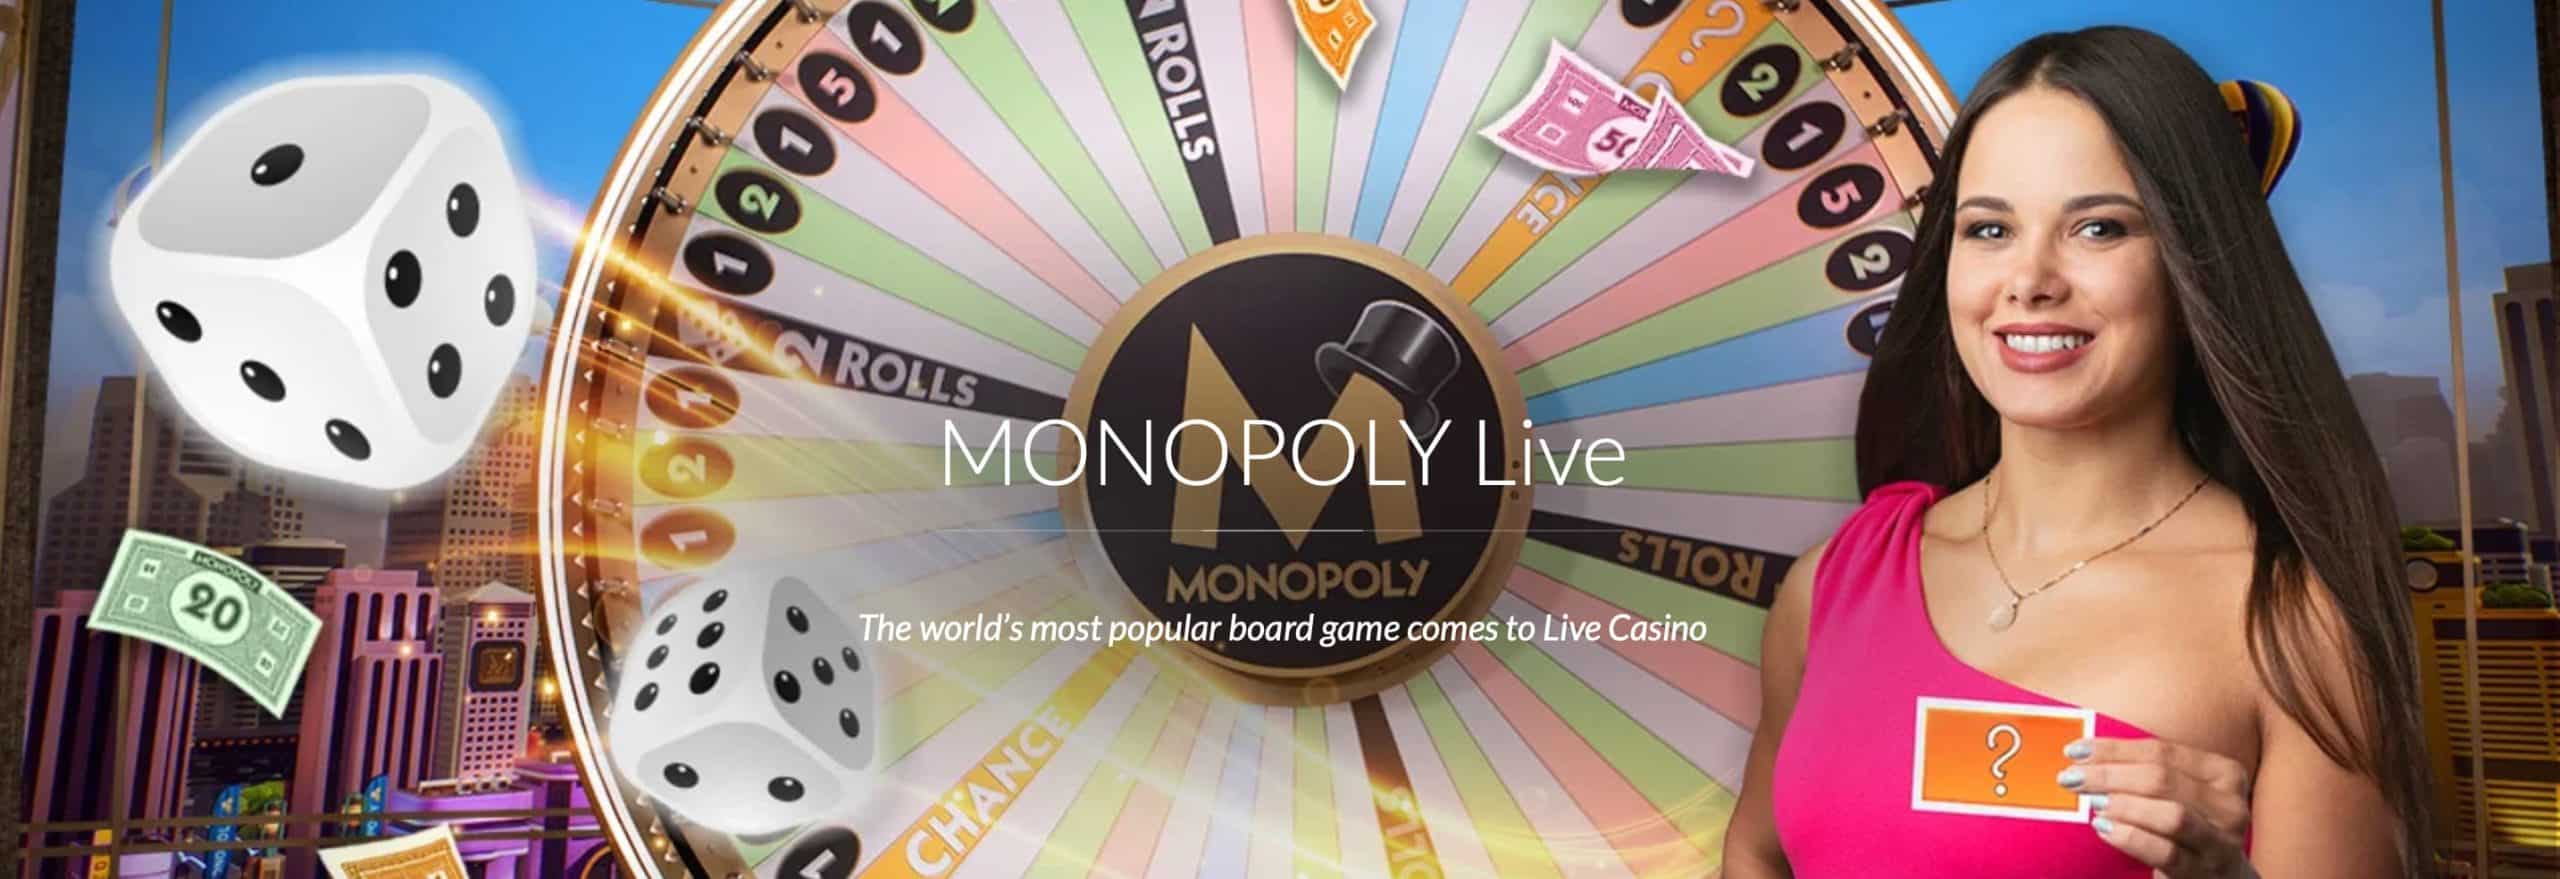 monopoly live evolution gaming